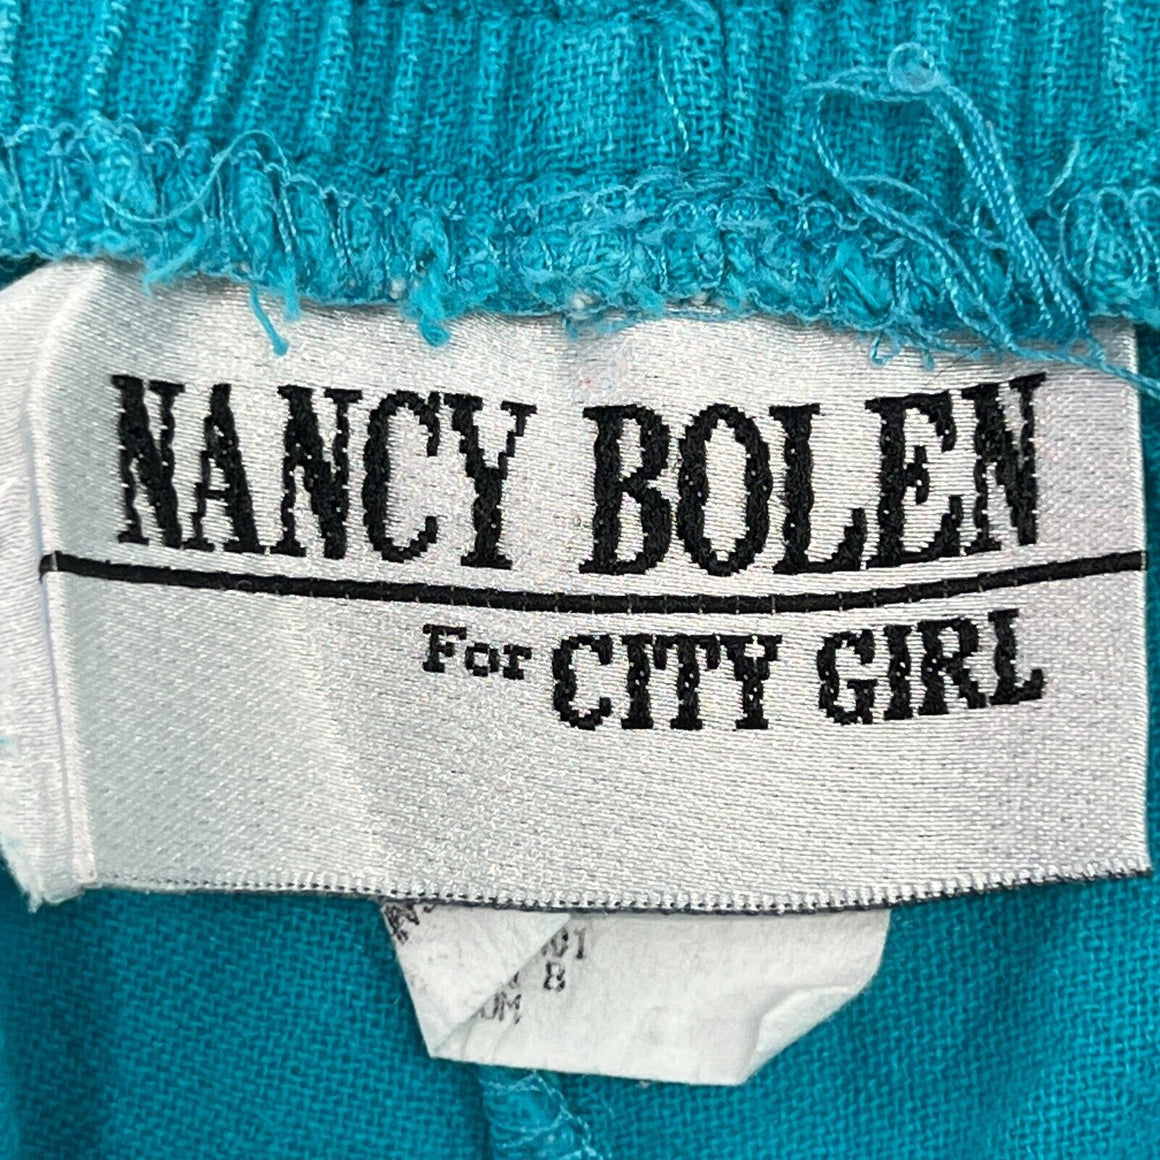 Nancy bolen city girl - Gem